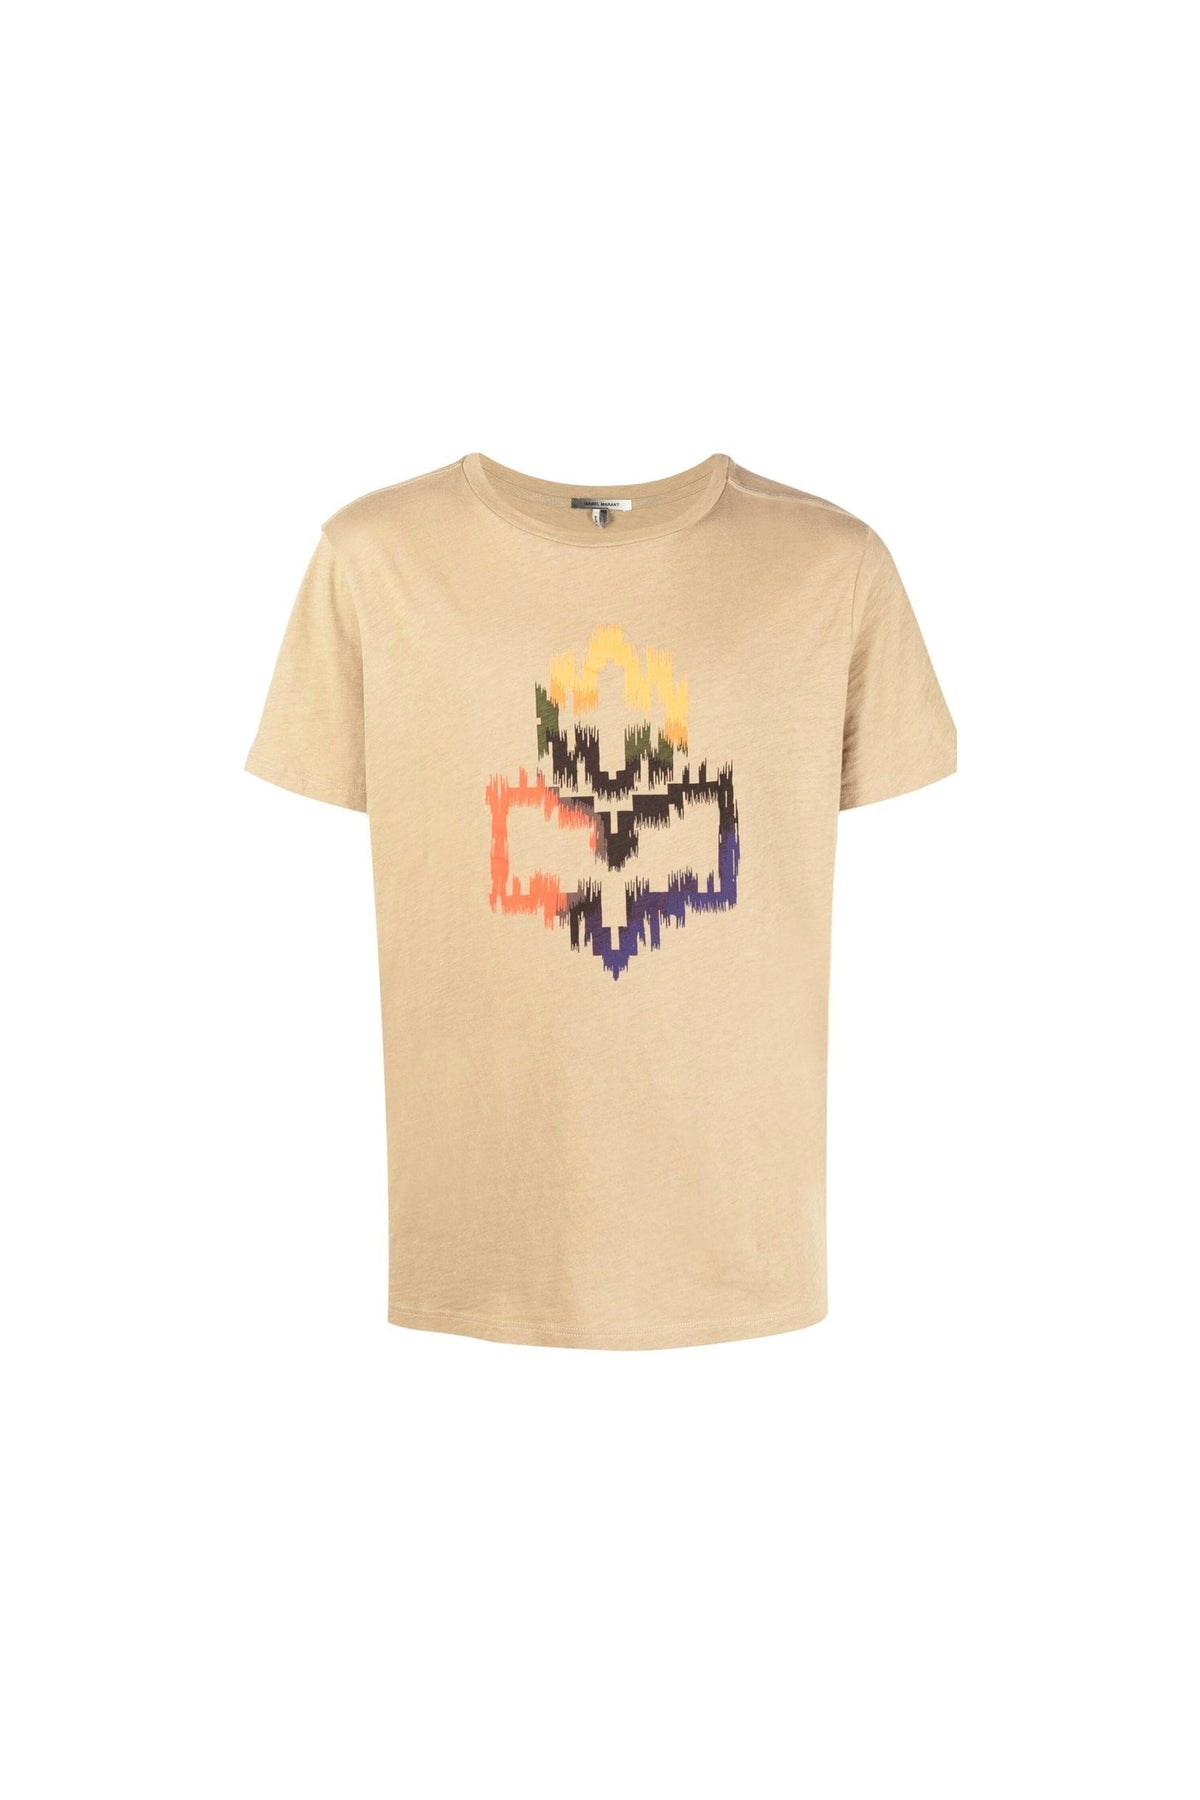 Isabel Marant logo-print cotton T-shirt